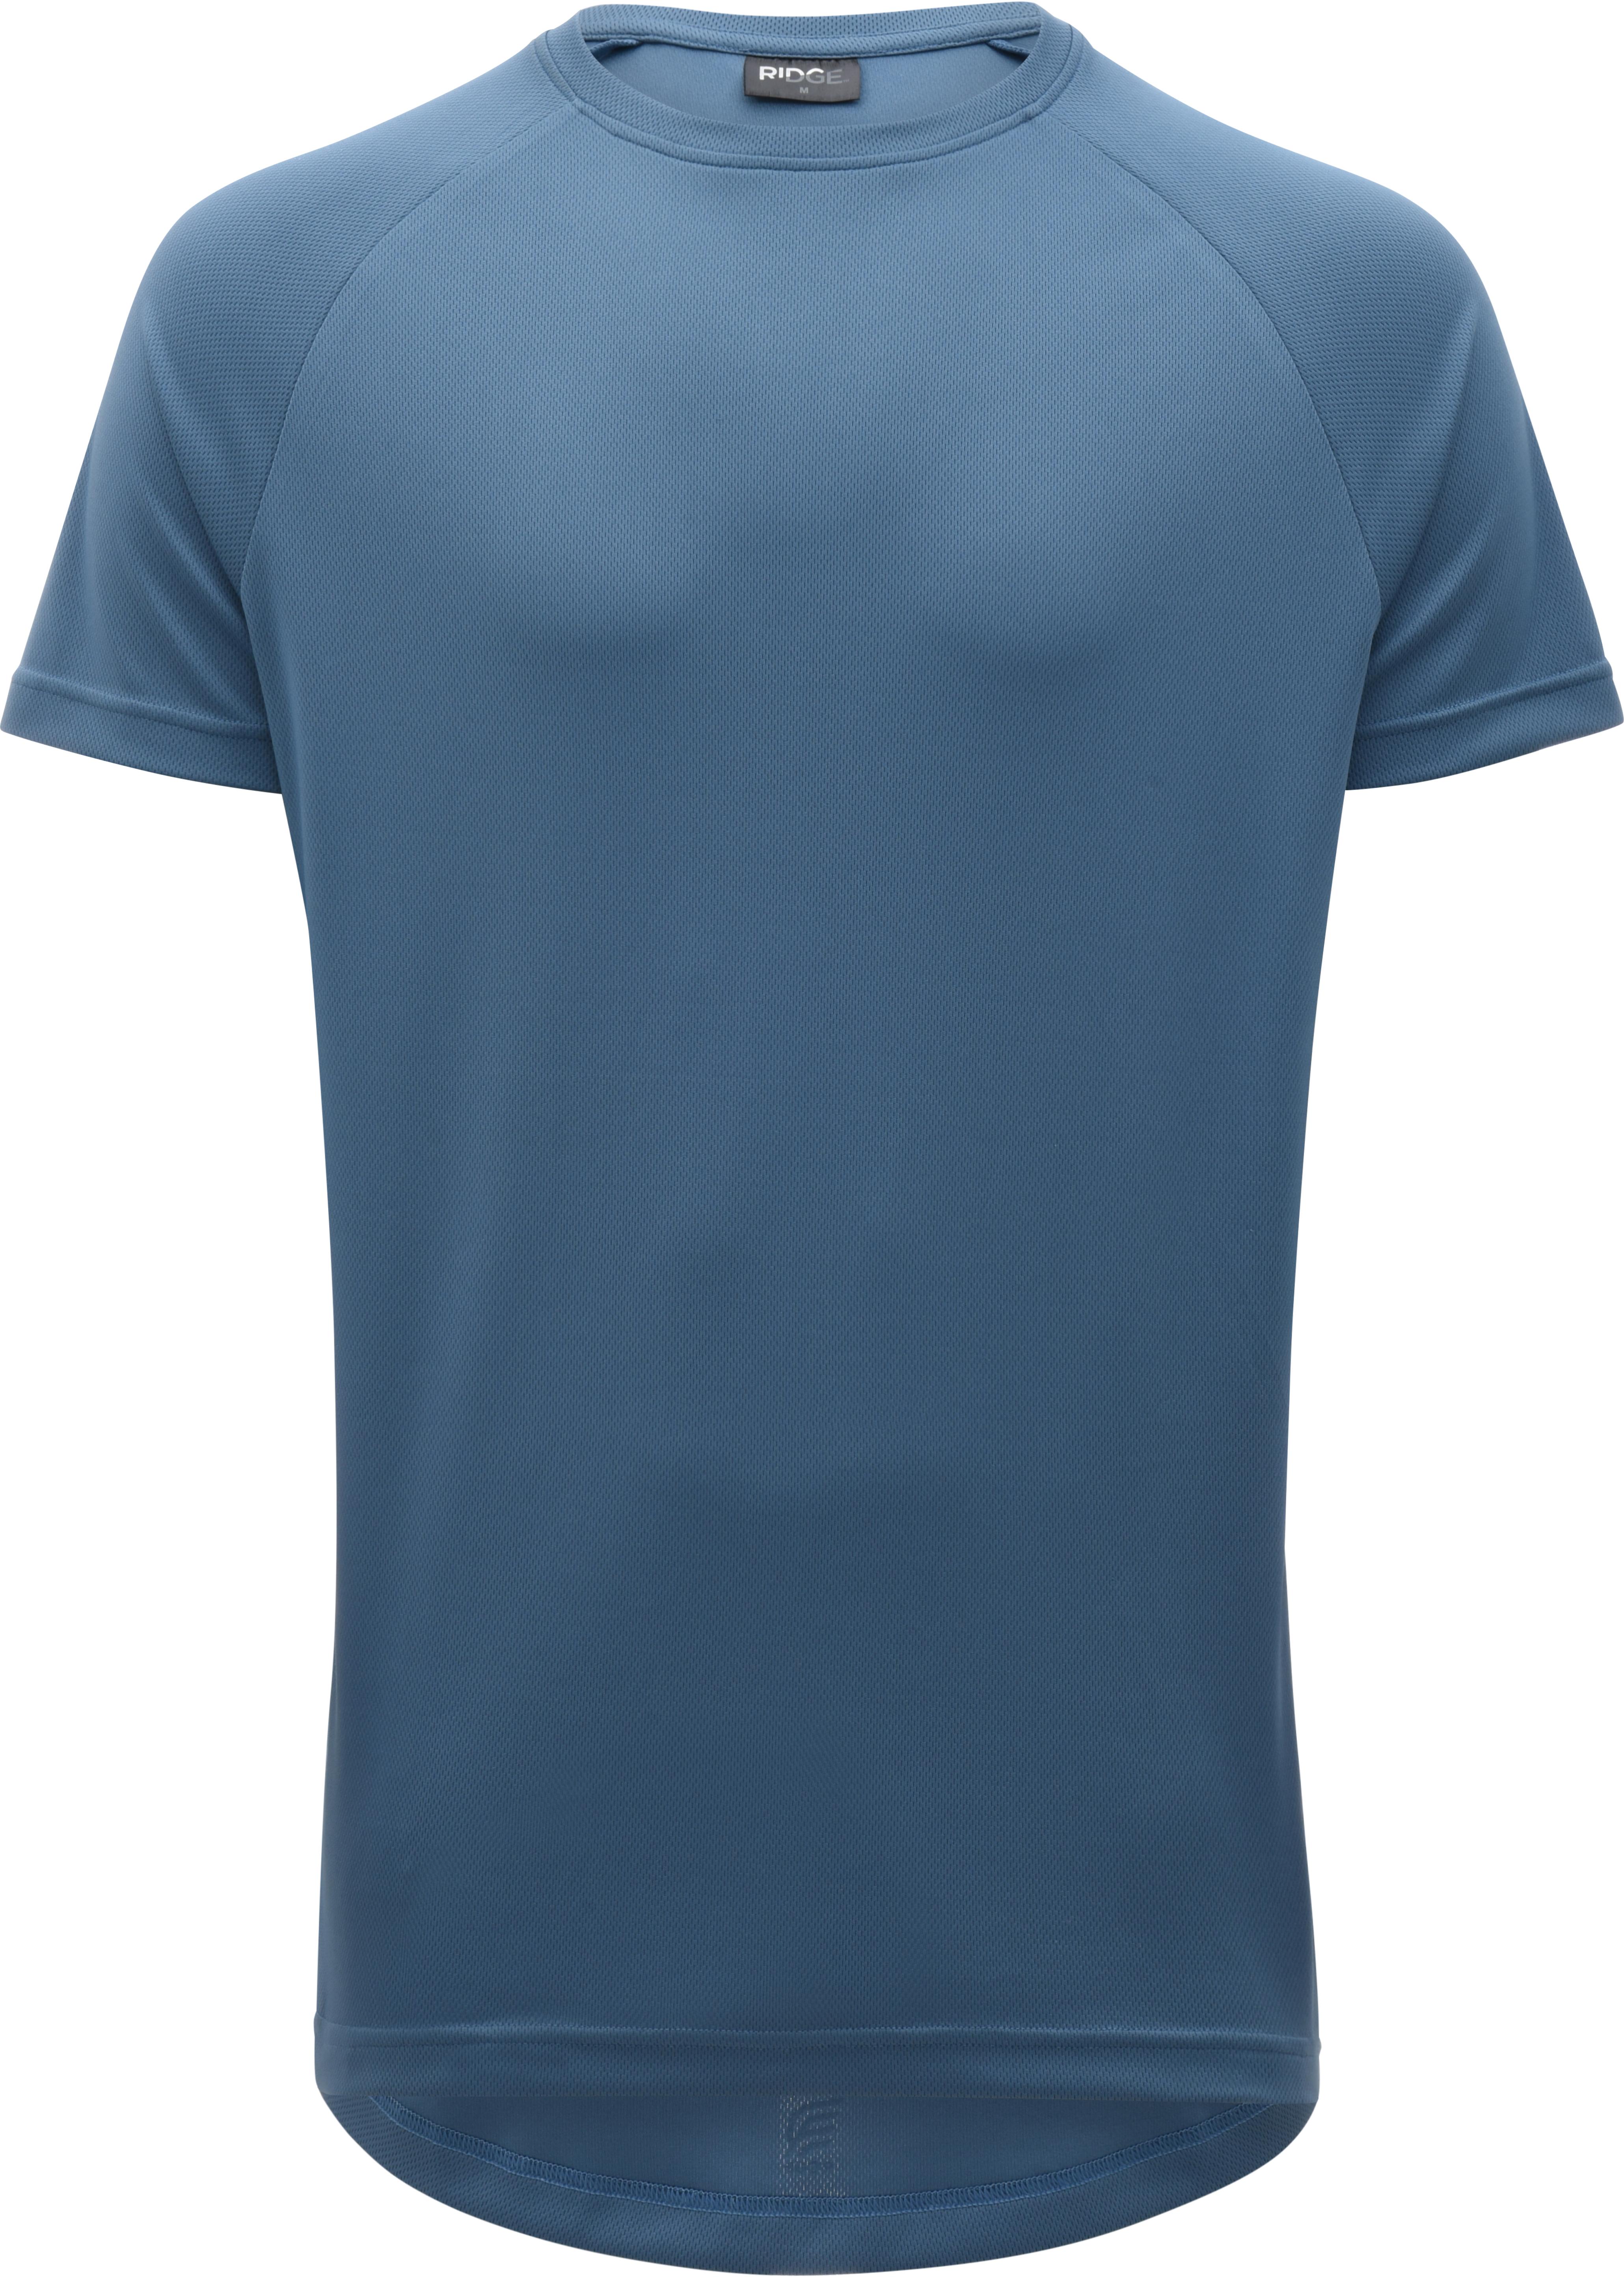 Ridge Mens Cycling T Shirt - Blue Stone Medium